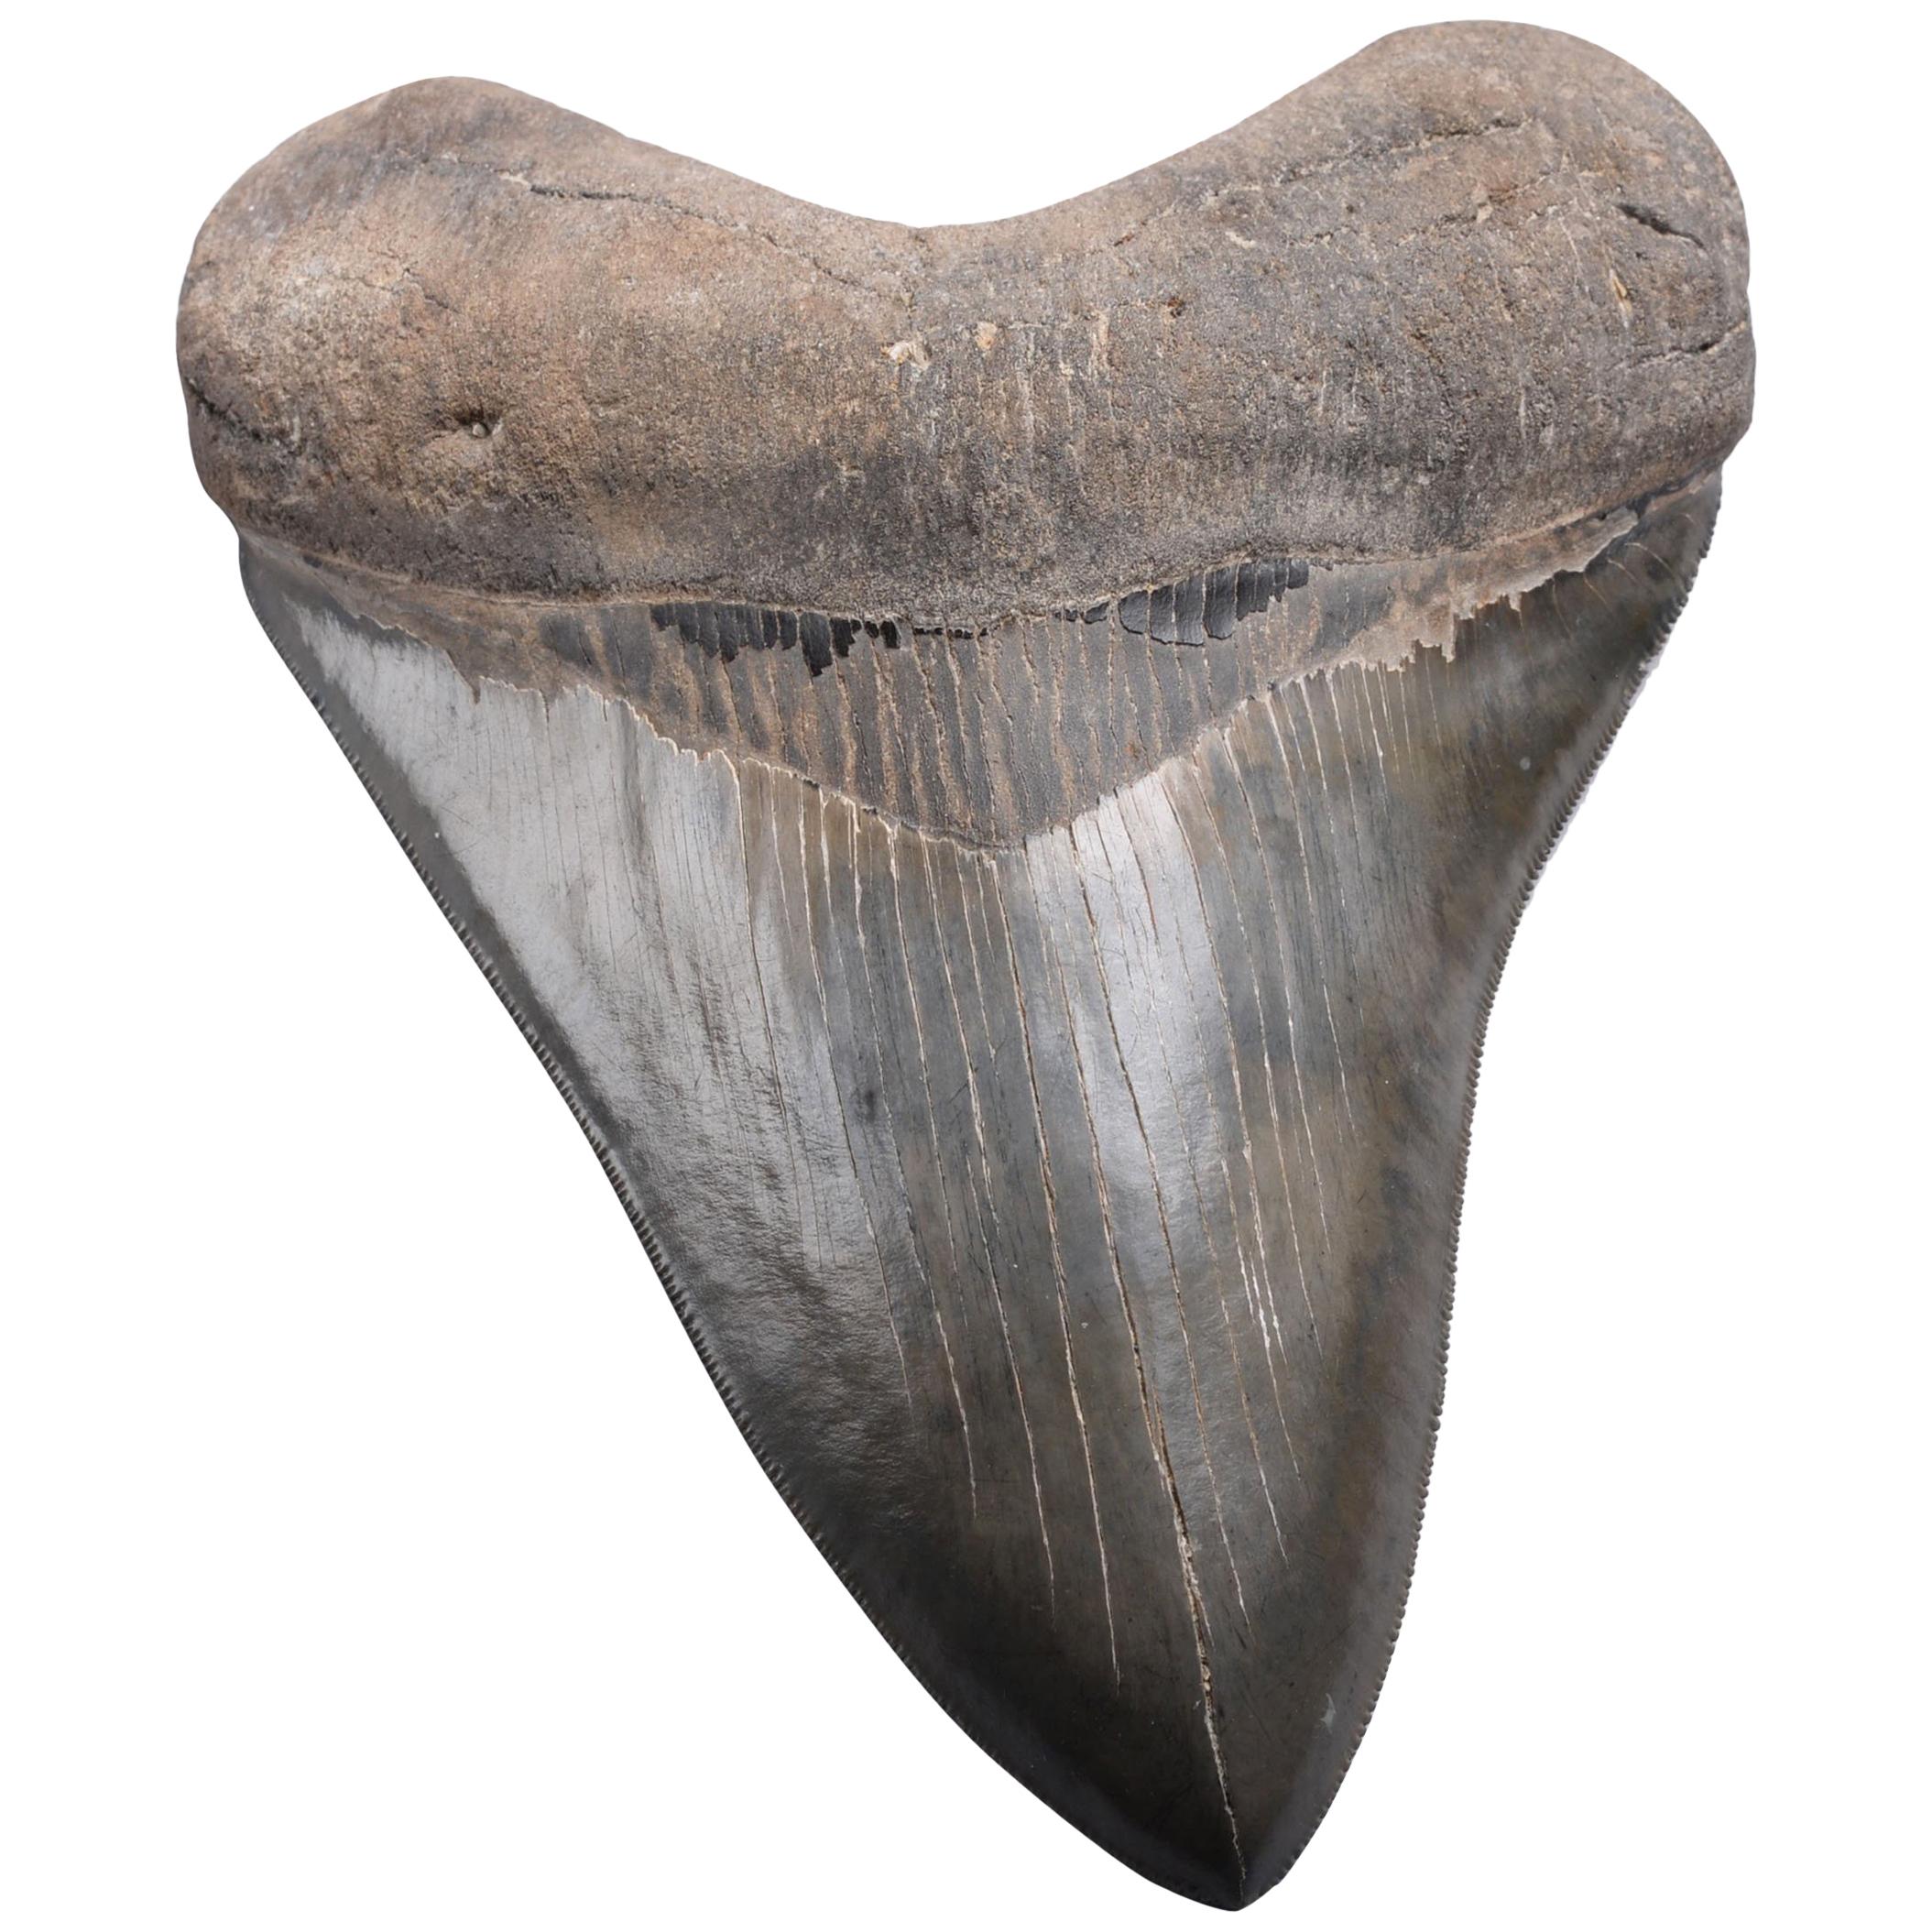 Huge Pristine Megalodon Tooth, Prehistoric Shark Fossil